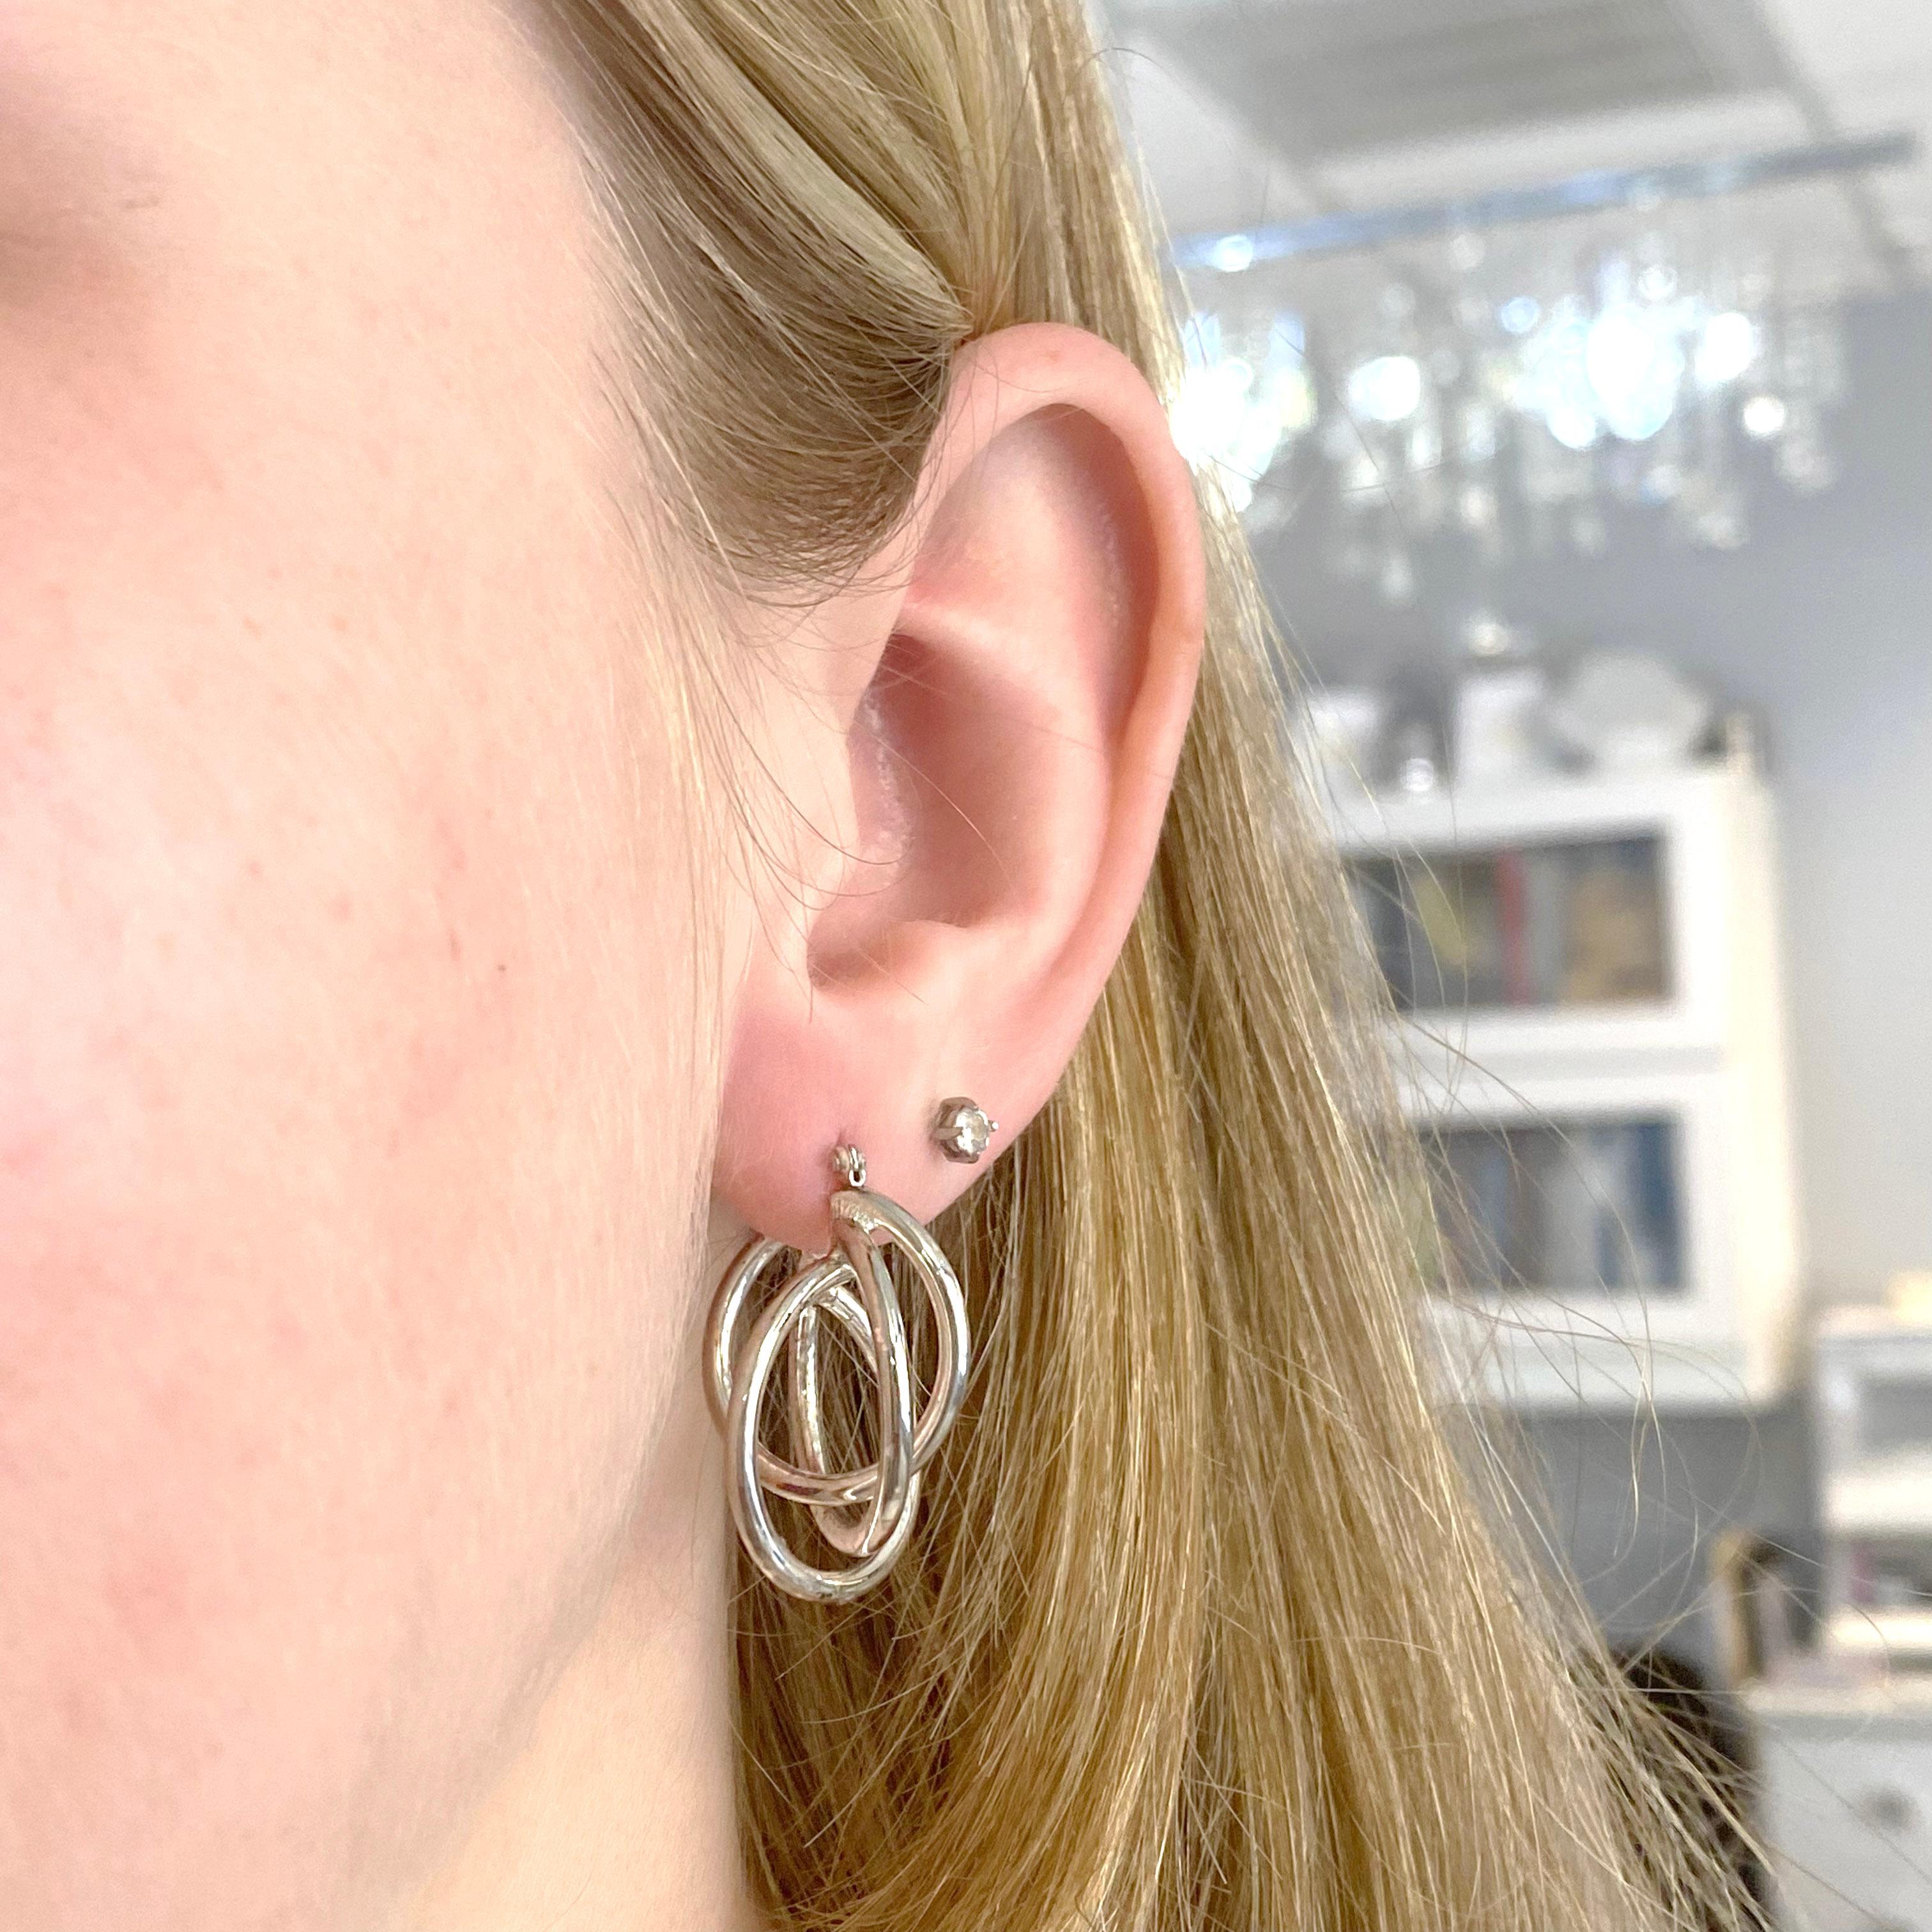 Earrings: 1 Set
Metal Quality: Sterling Silver
Earring Type: Hoops
Clasp Type: Hinge
Earring Length: 26.2 millimeters
Hoop Depth: 21.4 millimeters
Earring Width: 21.7 millimeters 
Total Weight: 9.1 grams